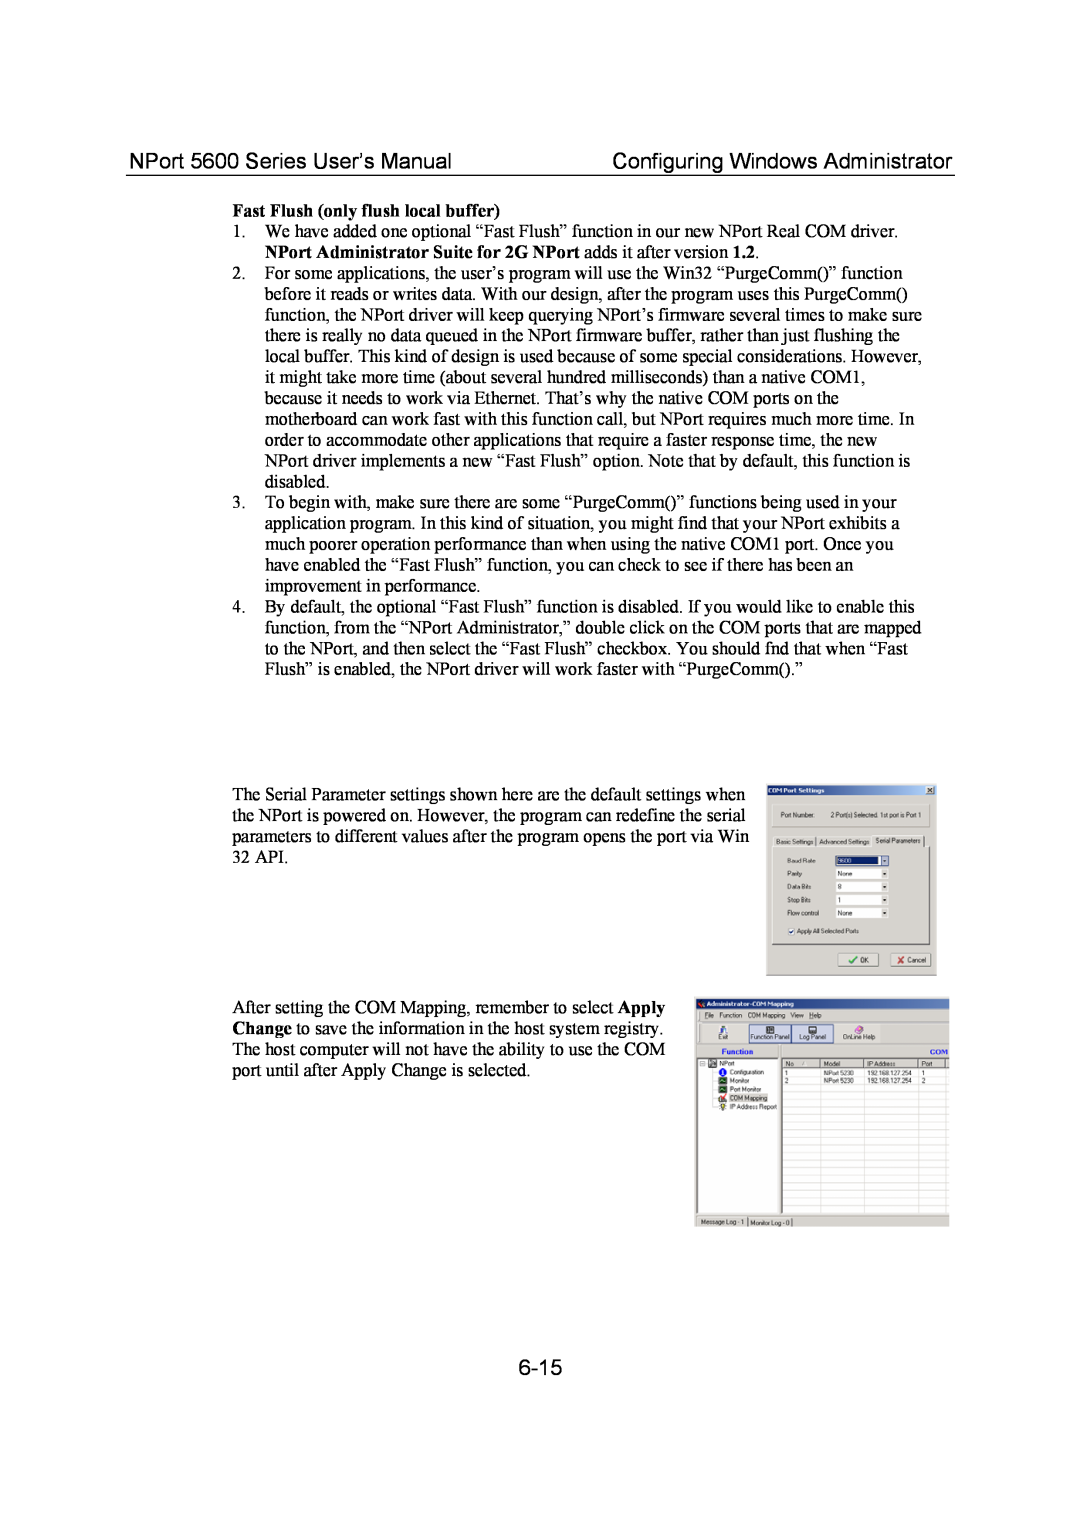 Moxa Technologies user manual 6-15, NPort 5600 Series User’s Manual, Configuring Windows Administrator 